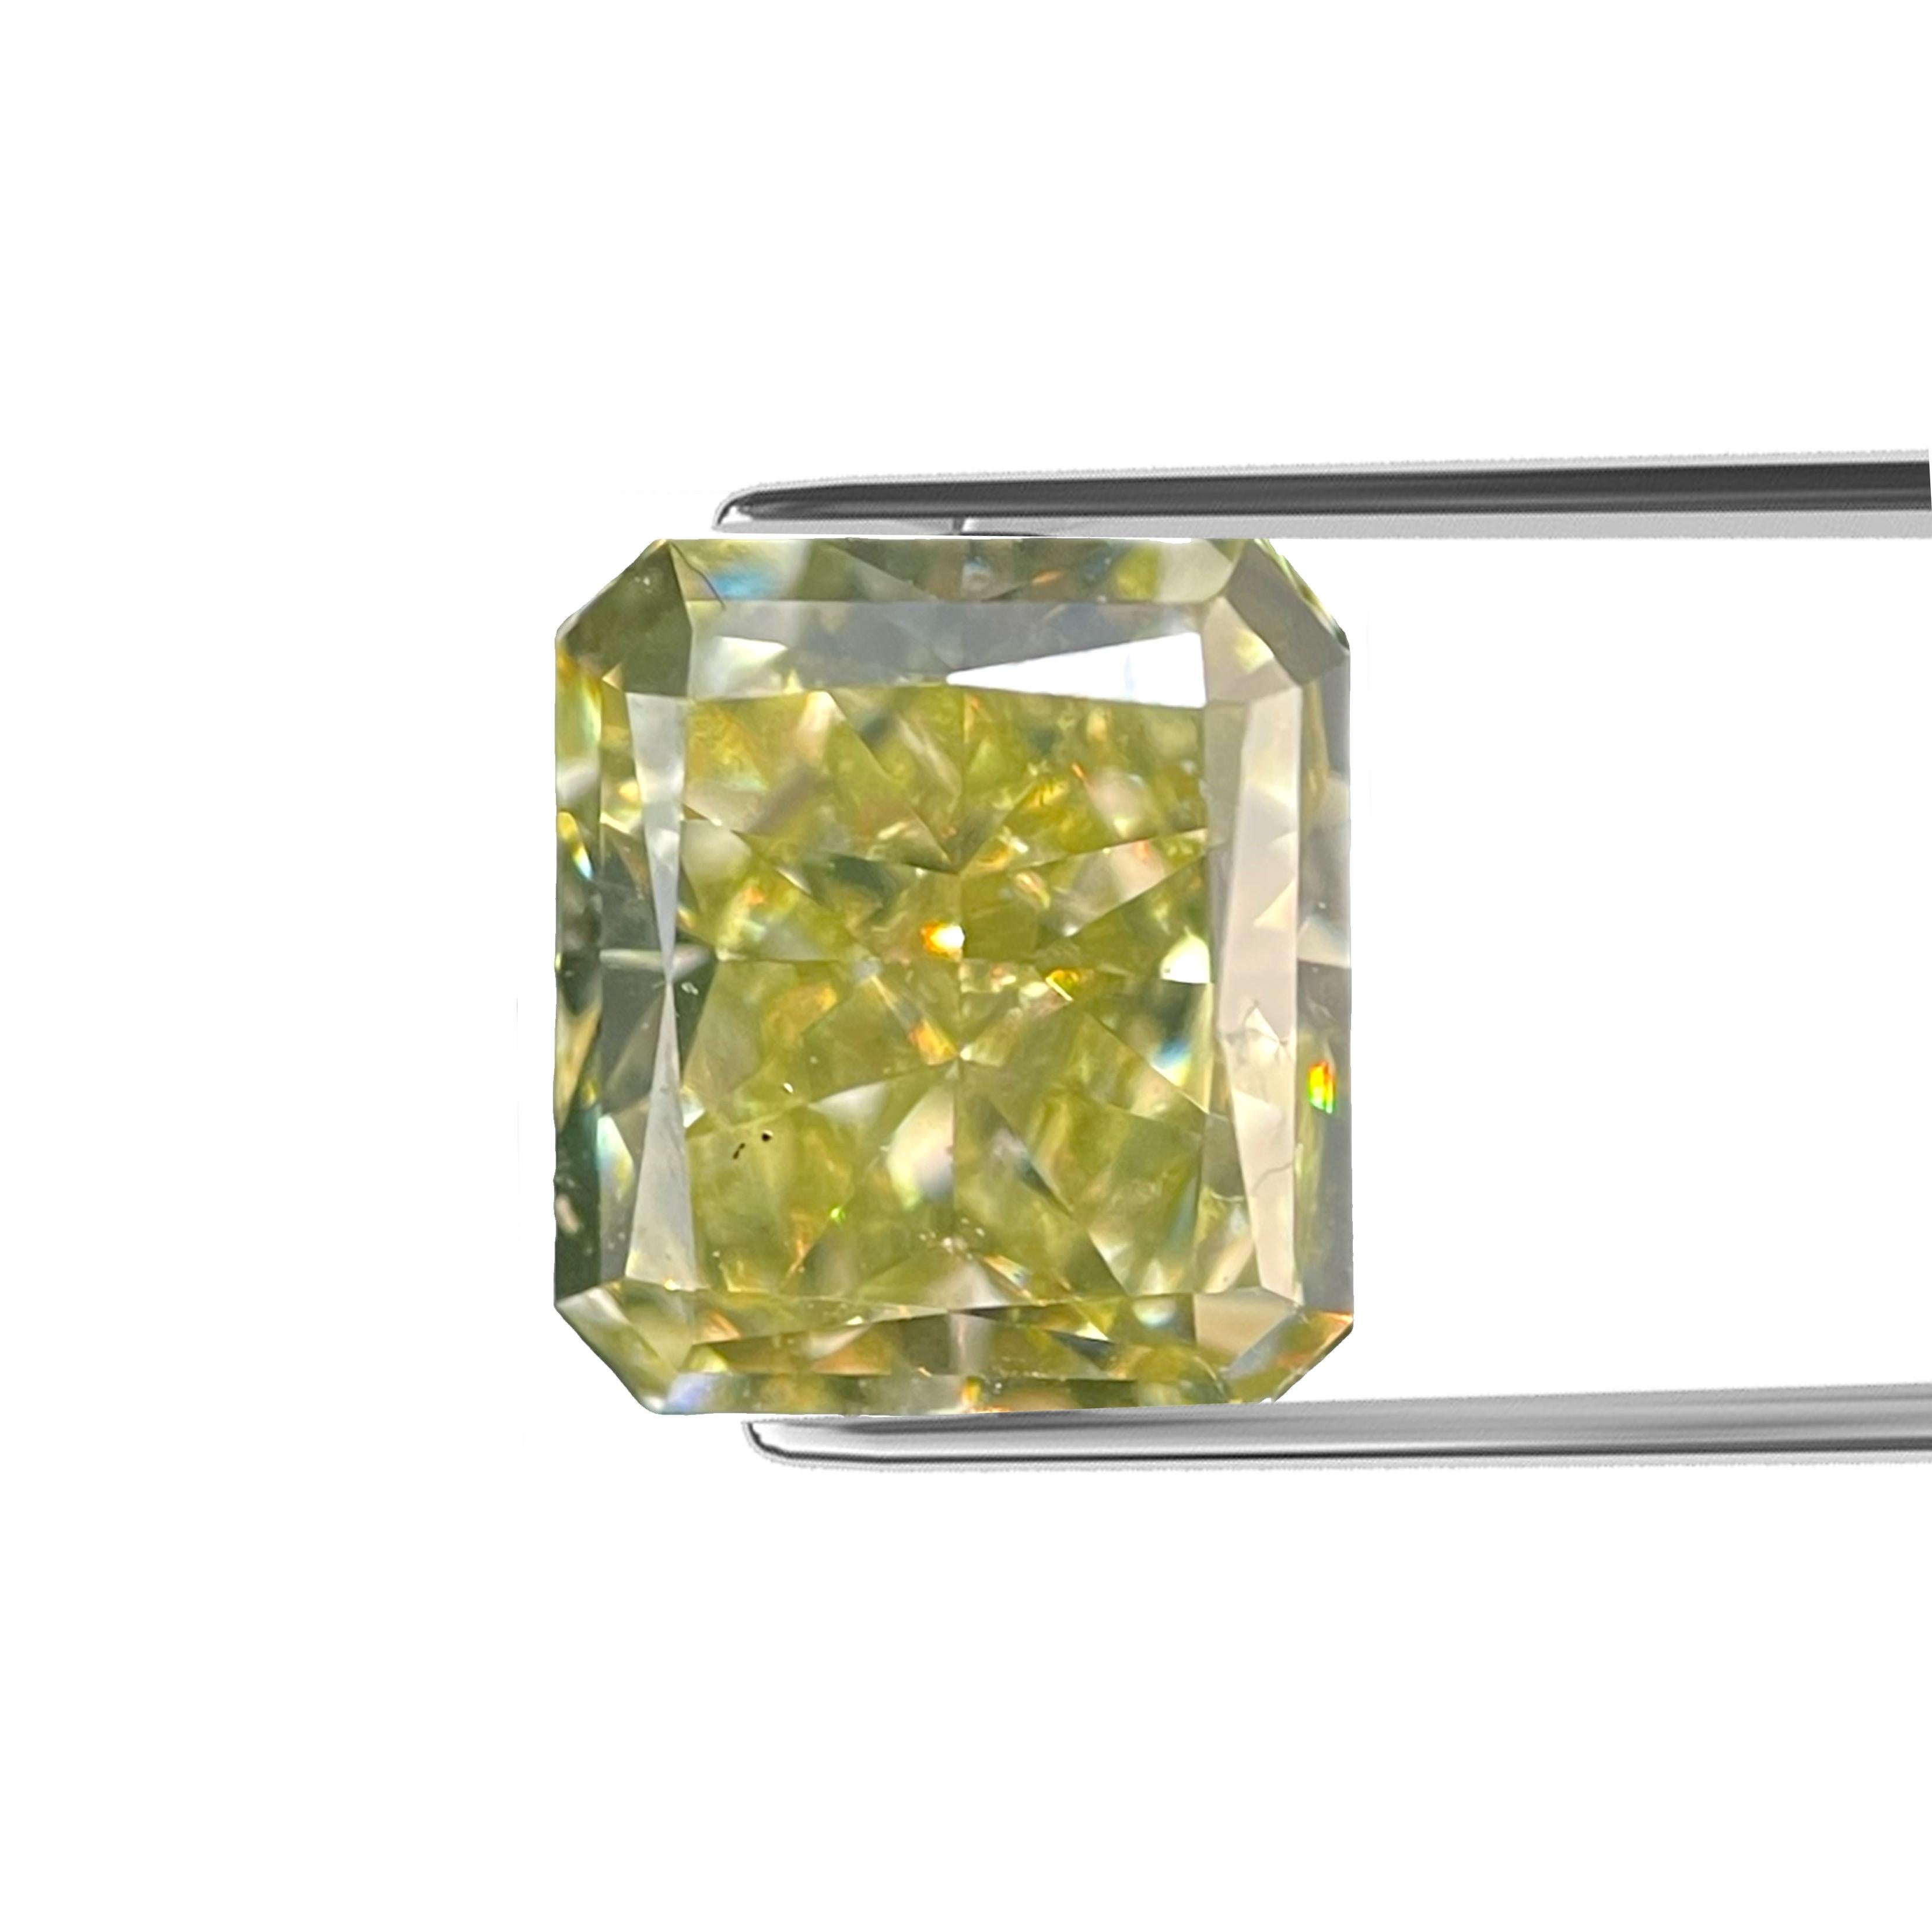 ITEM DESCRIPTION
ID #:	NYC55743
Stone Shape:	CUT-CORENRED RECTANGULAR MODIFIED BRILLIANT 
Diamond Weight:	1.28ct
Clarity:	VS2
Color:	Fancy Yellow
Cut:	Excellent
Measurements: 6.26 x 5.66 x 3.90 mm
Depth %:	68.9%
Table